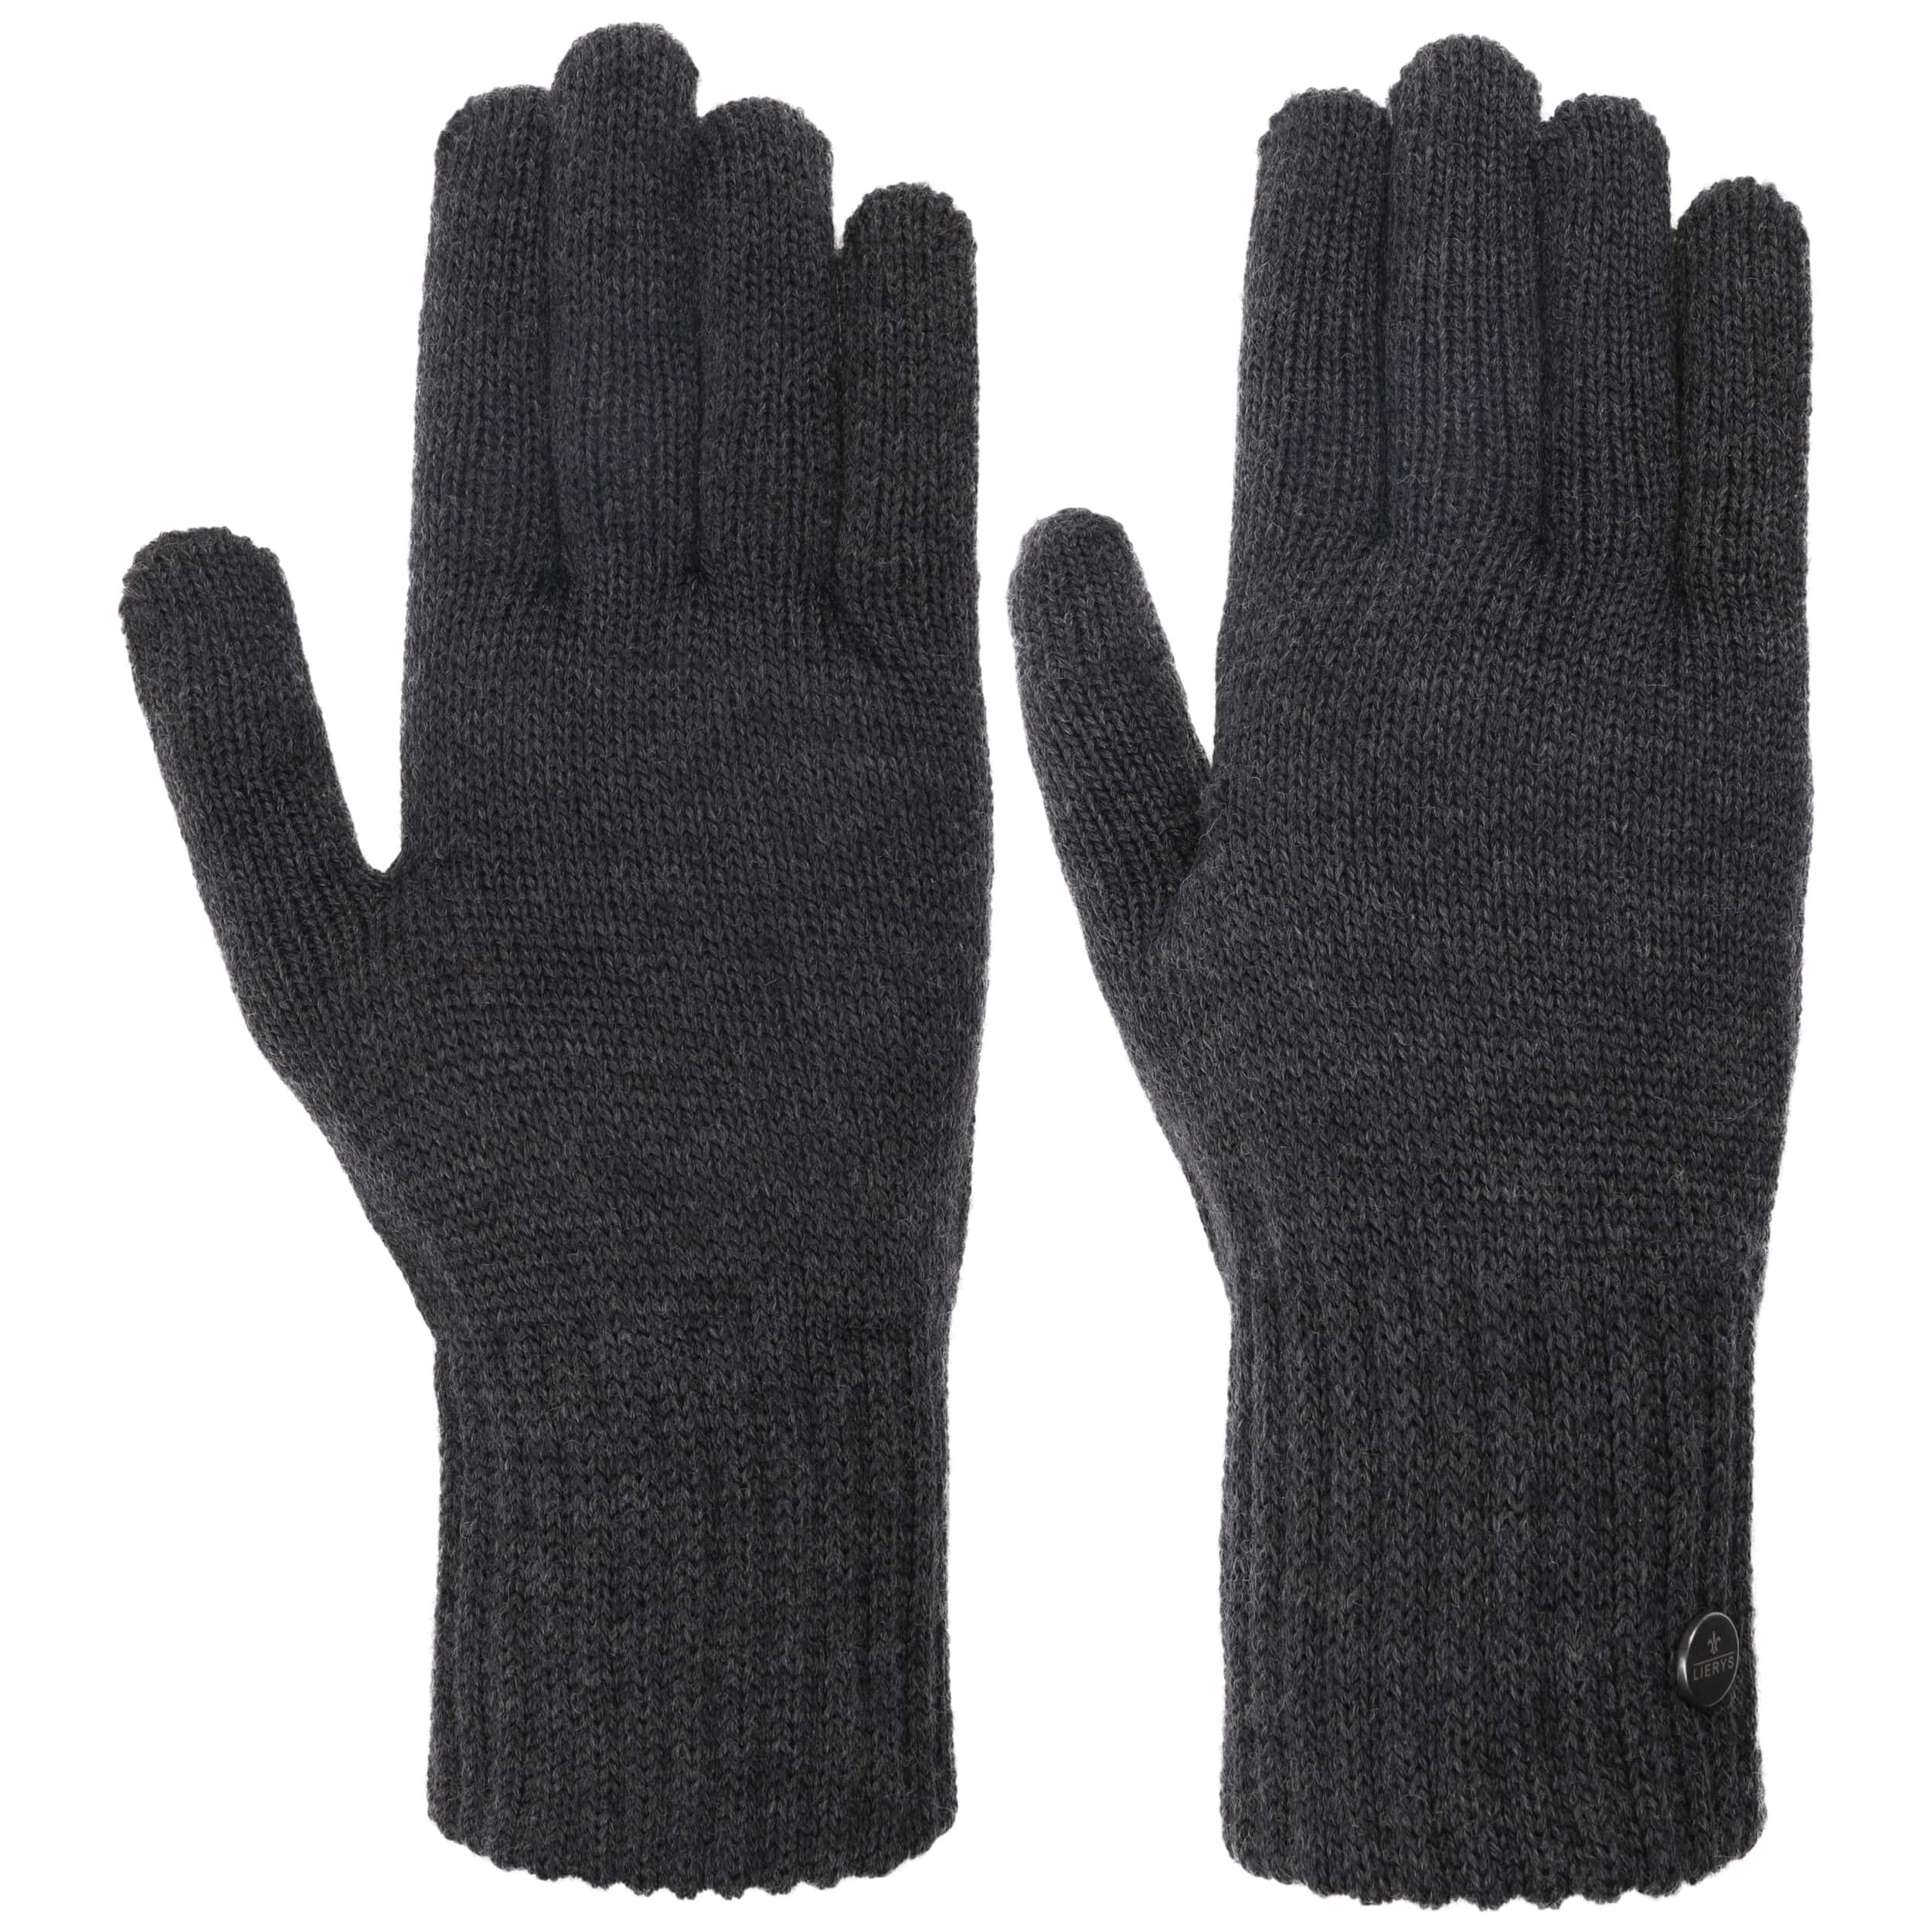 reinigen Op en neer gaan Weigeren Merino Dames Handschoenen by Lierys - 39,95 €